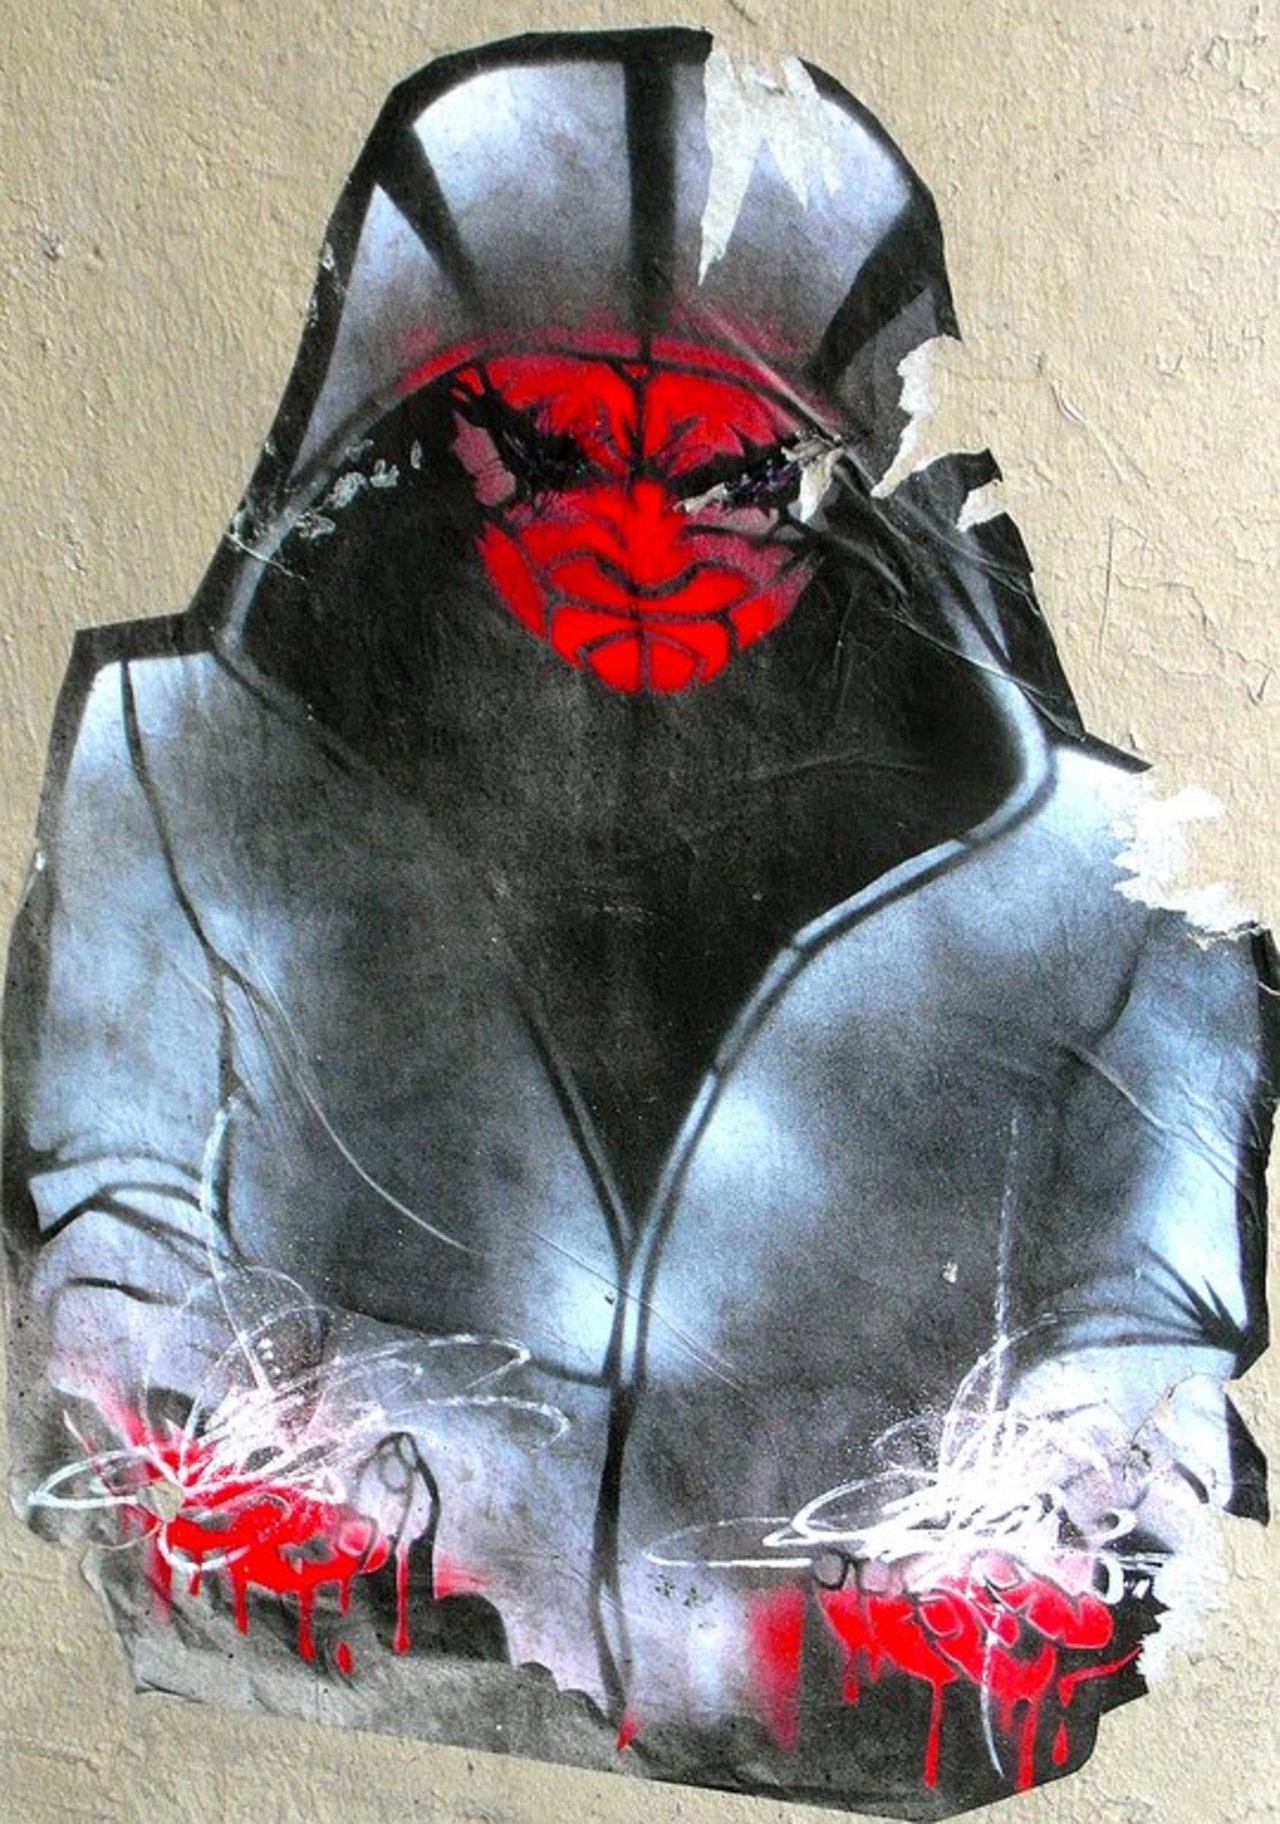 Street Art by anonymous in # http://www.urbacolors.com #art #mural #graffiti #streetart https://t.co/NrCba2RZN5